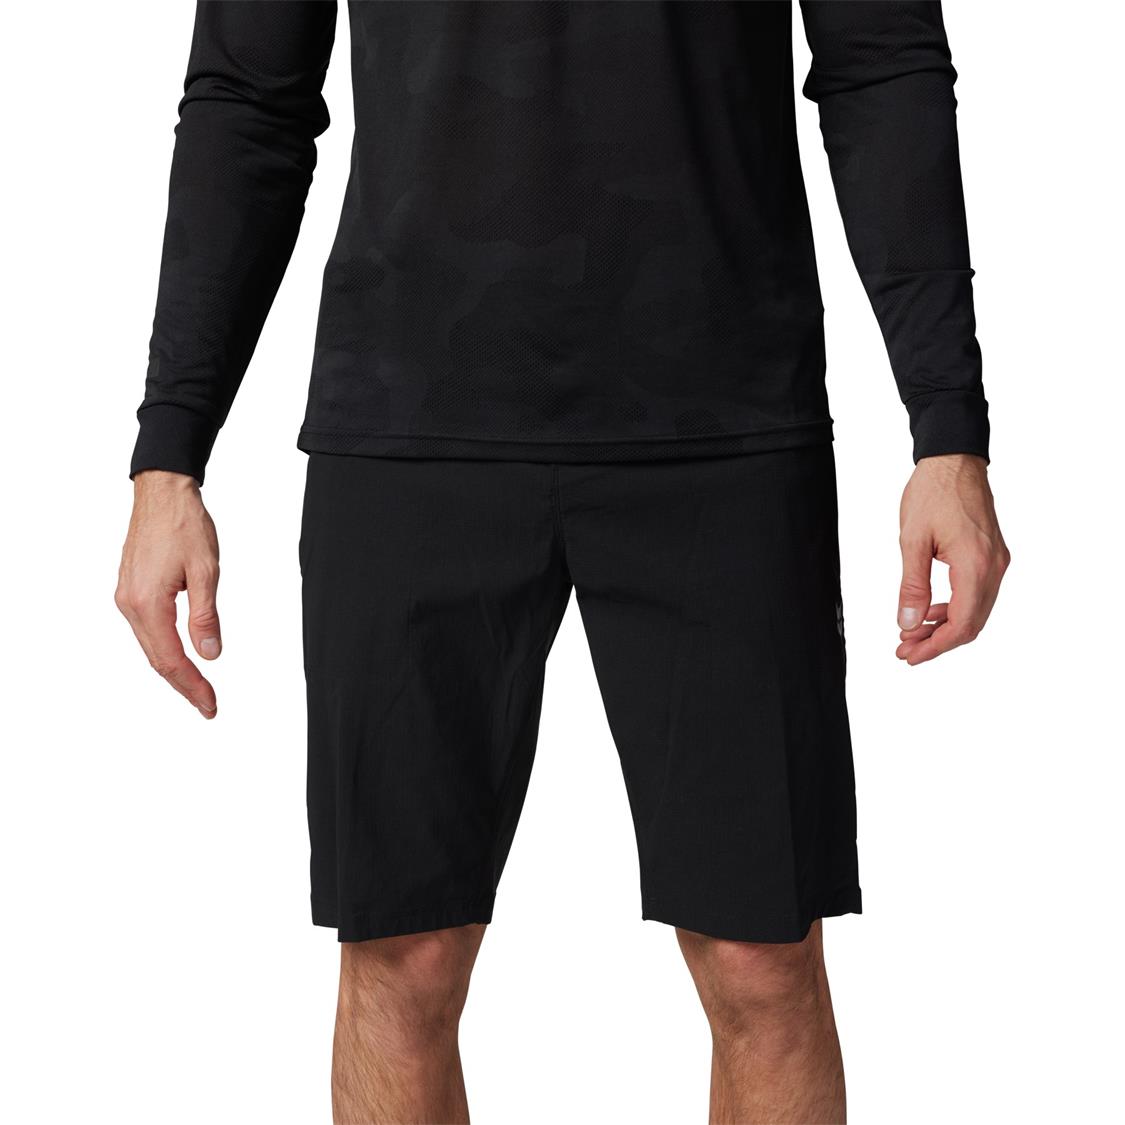 Fox Ranger Shorts with Liner - Black (31048-001)